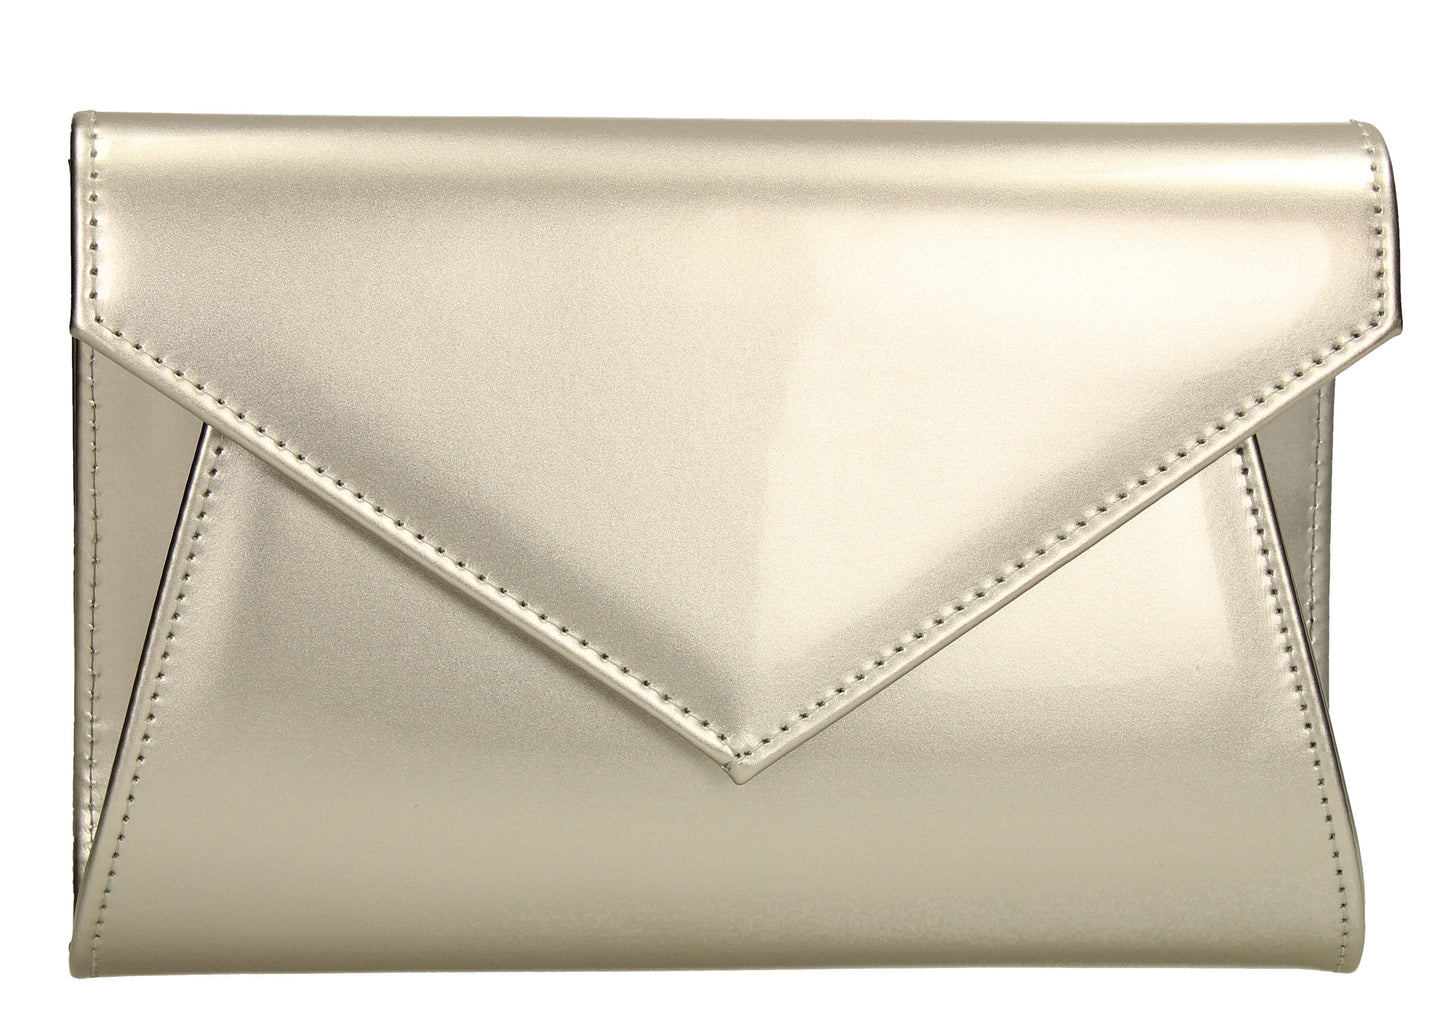 SWANKYSWANS Chrissy Envelope Clutch Bag Silver Cute Cheap Clutch Bag For Weddings School and Work